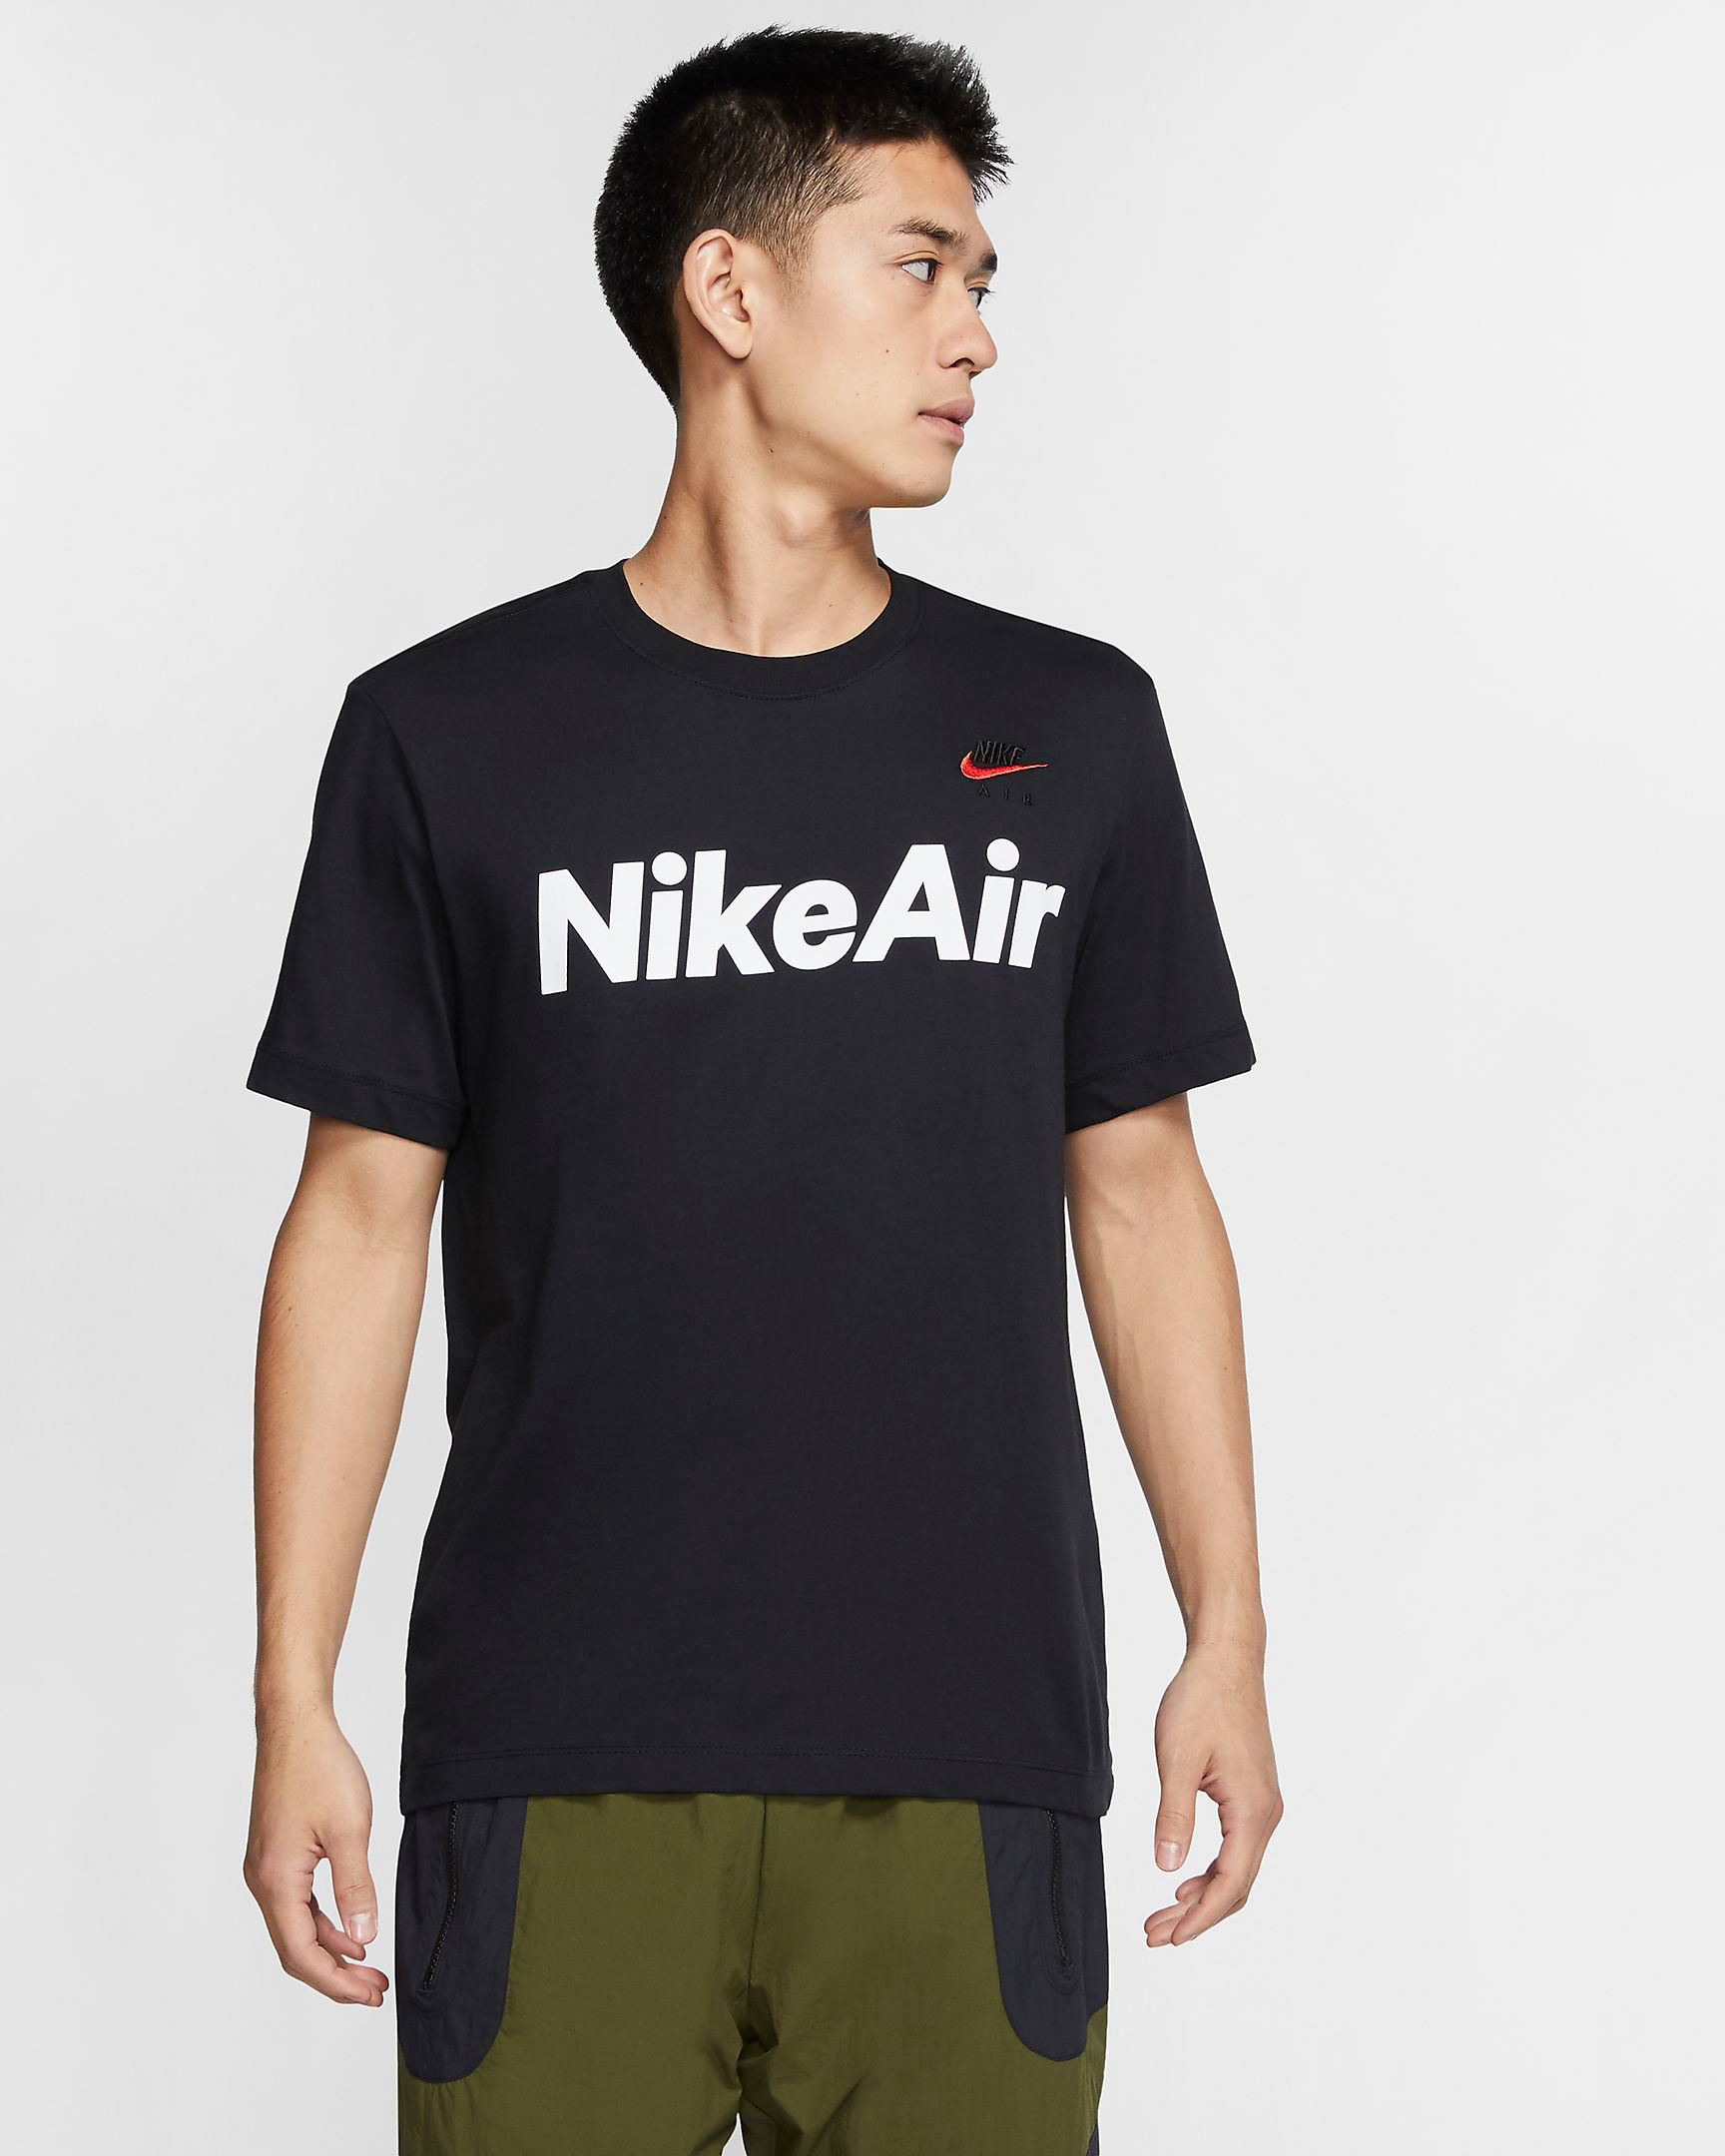 nike-air-shirt-black-white